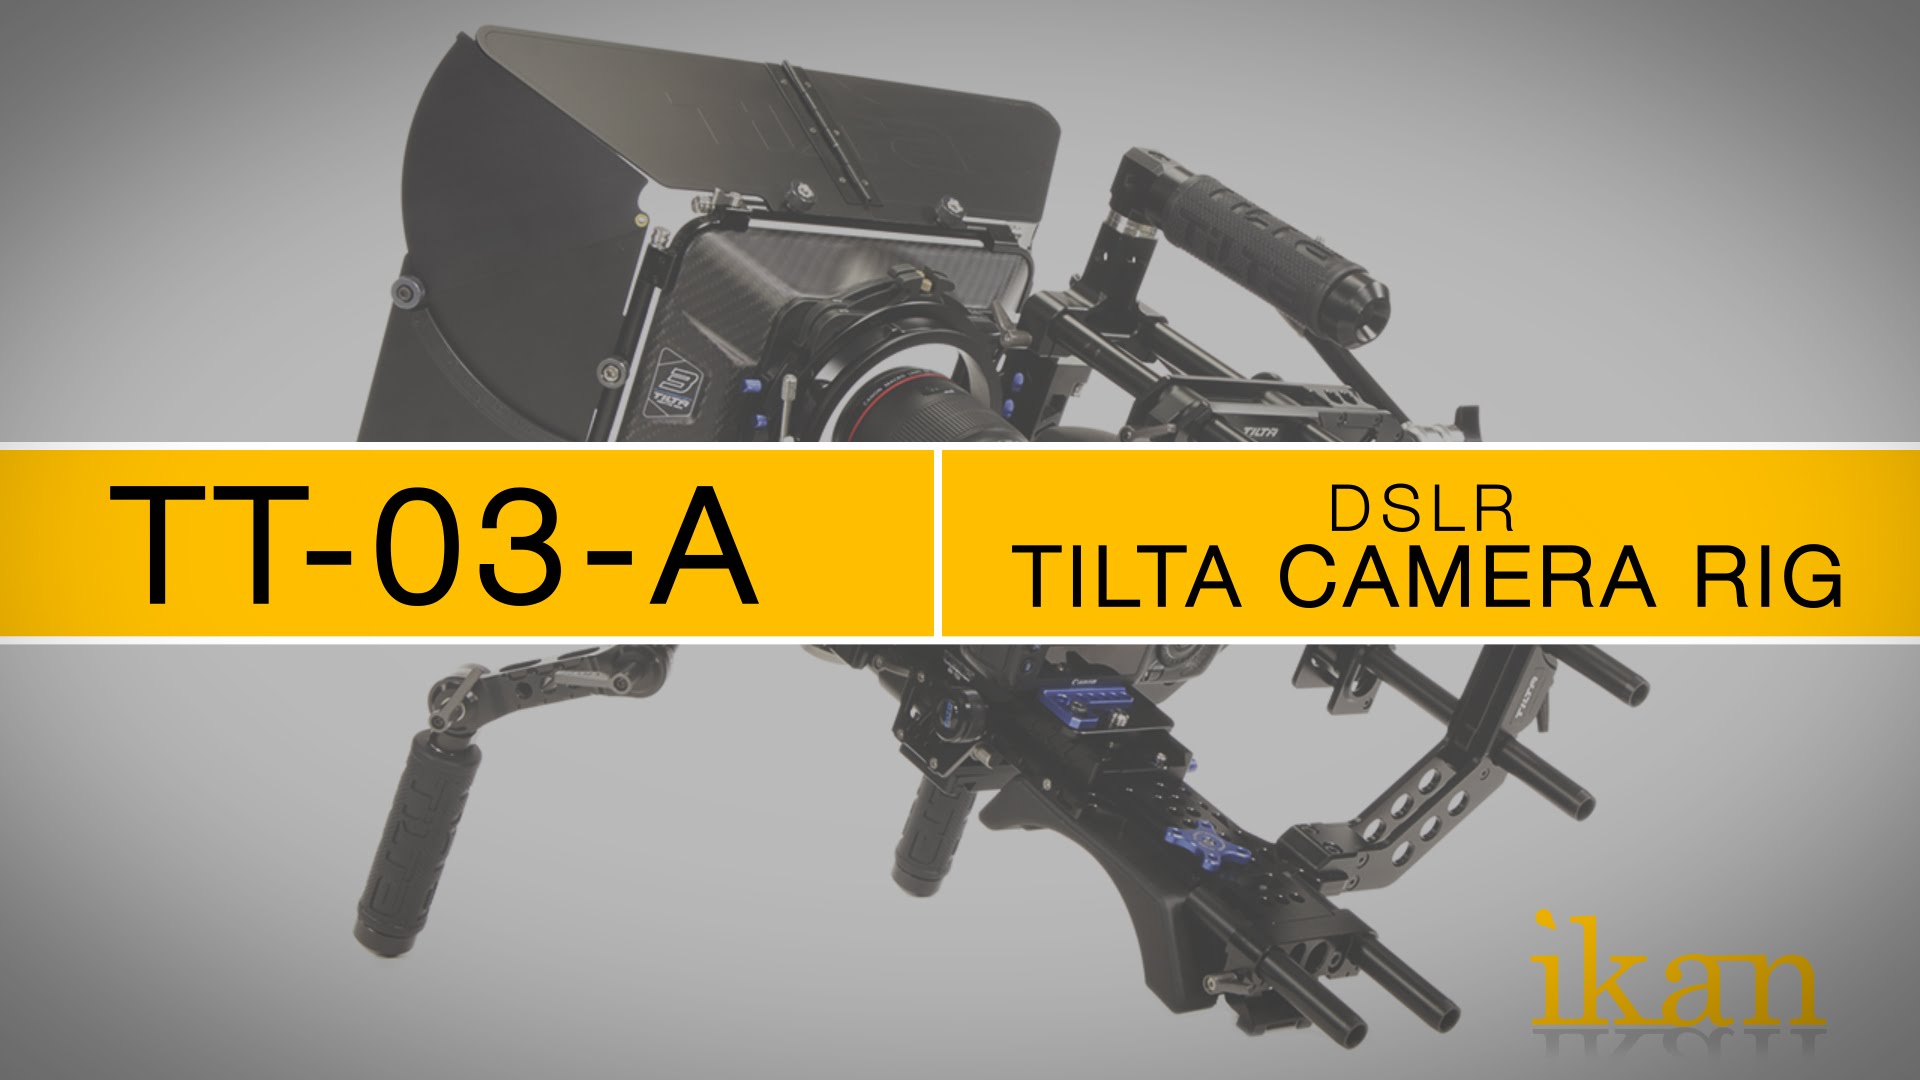 Tilta DSLR Camera Rig | TT-03-A